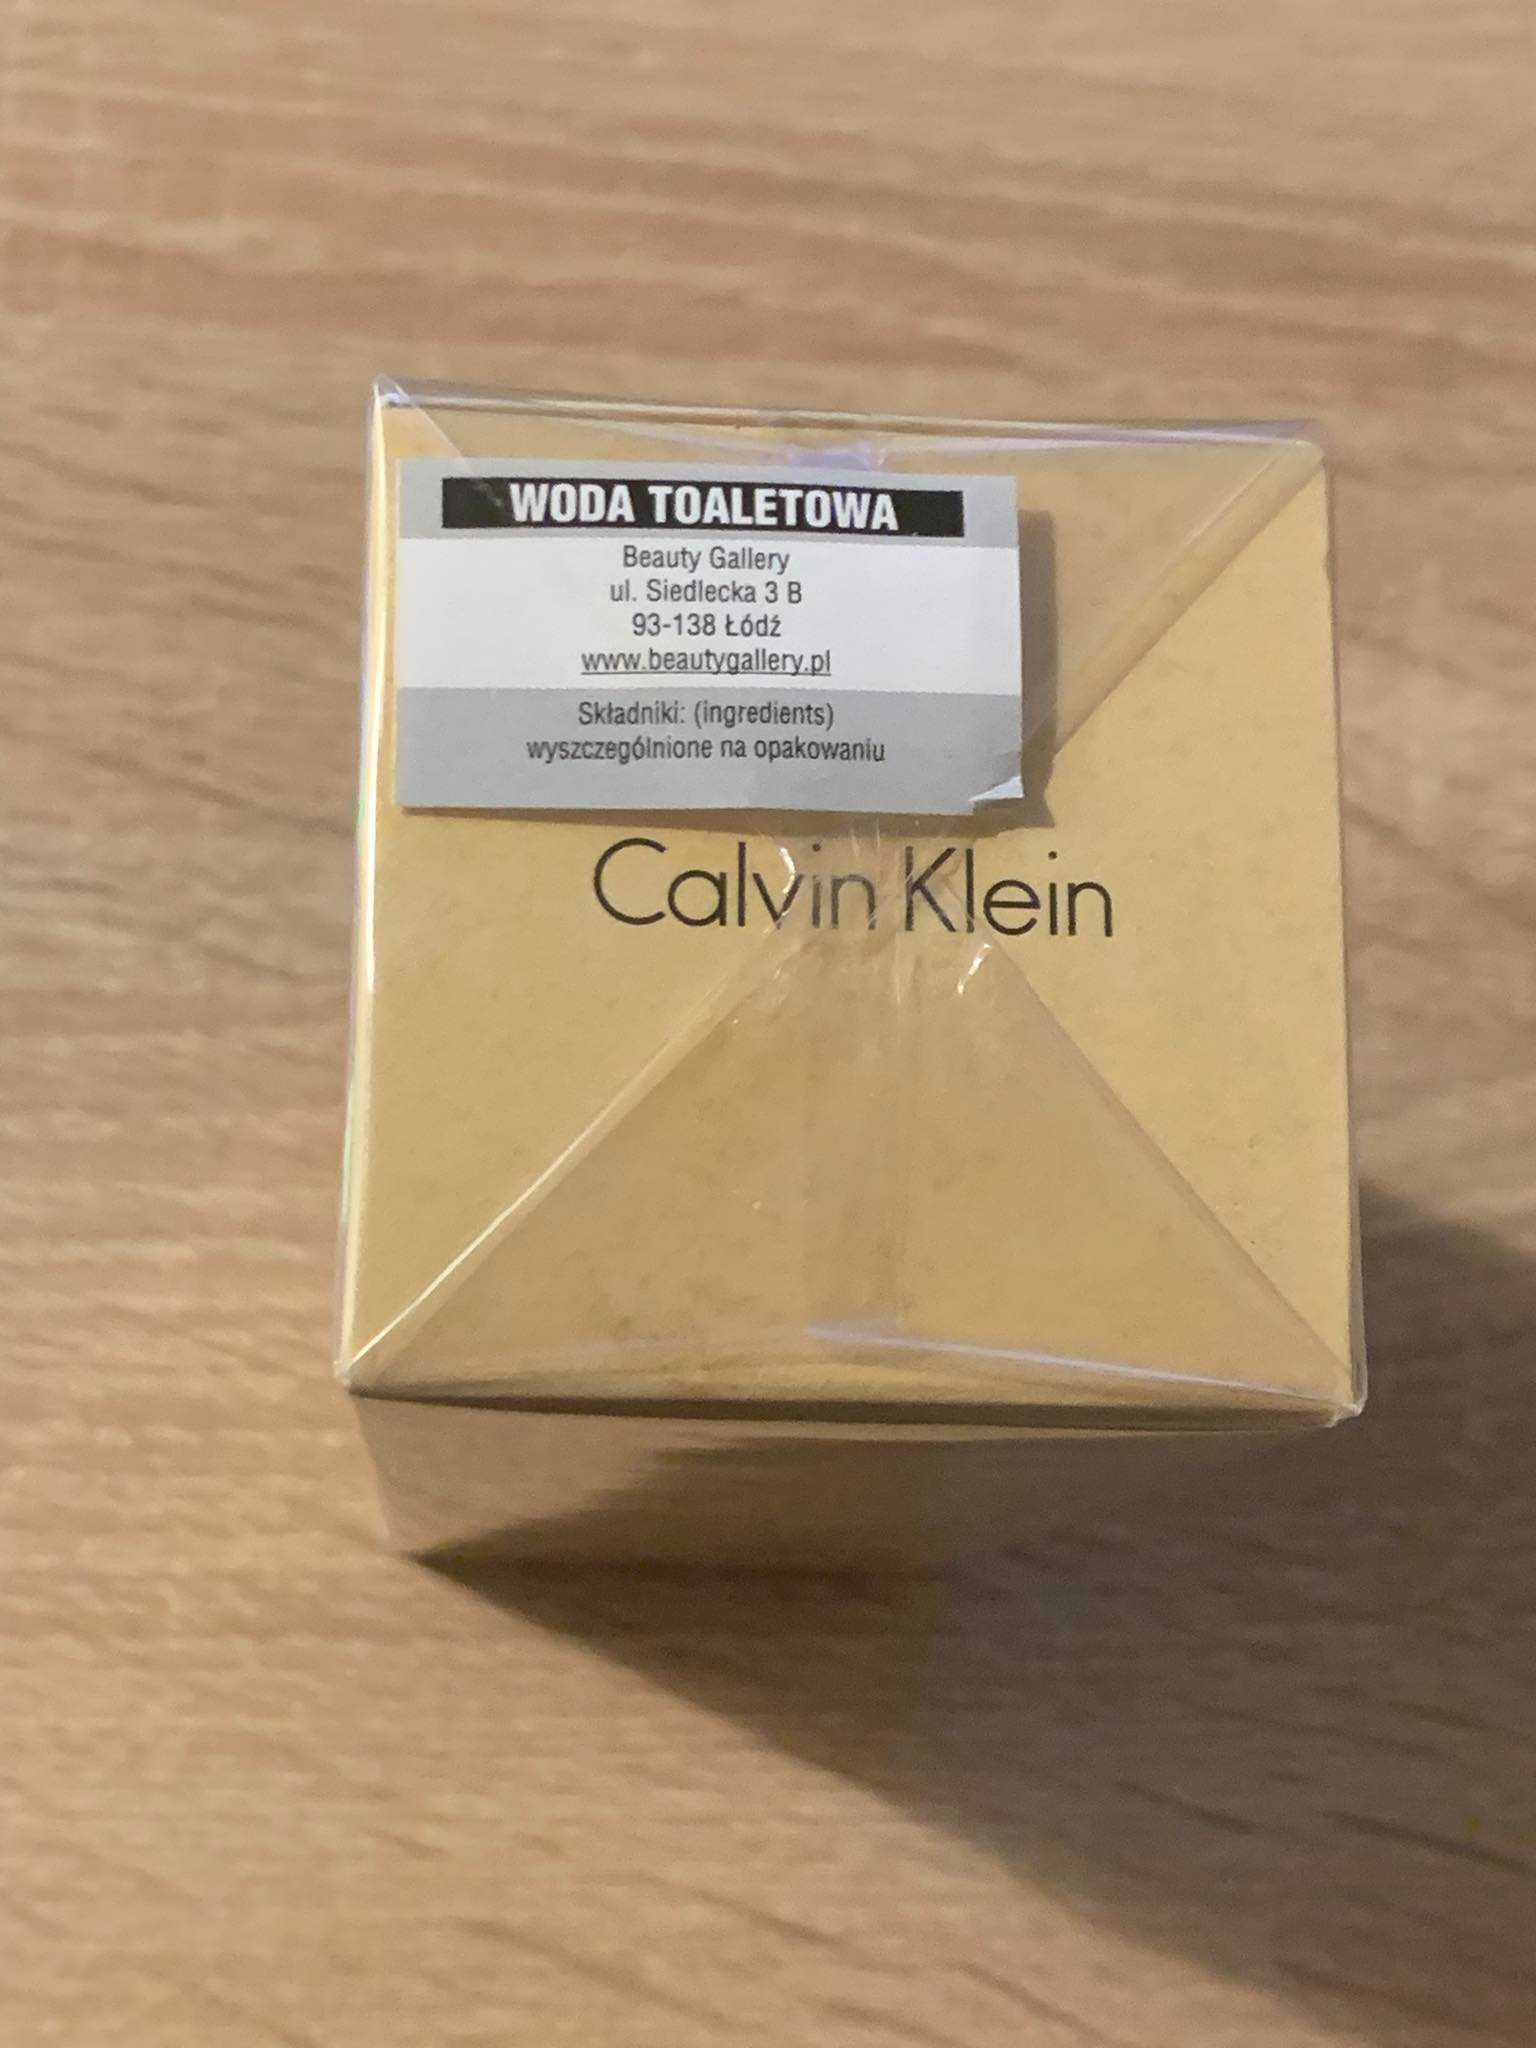 Sprzedam wodę toaletową marki Calvin Klein Escape for Men 100ml